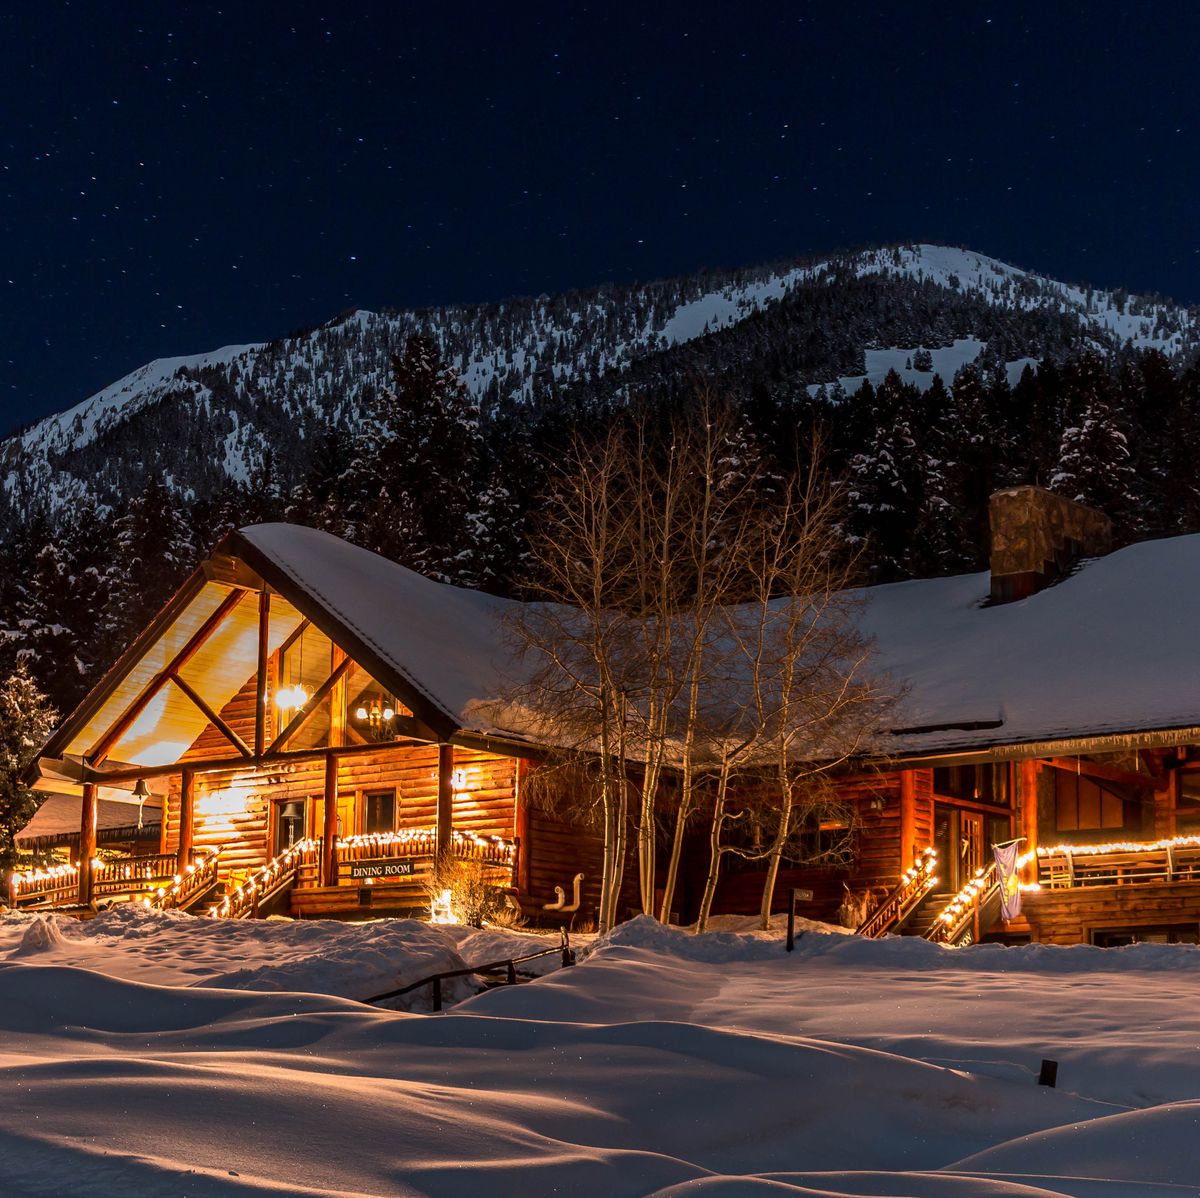 7 winter luxury resorts to try this winter